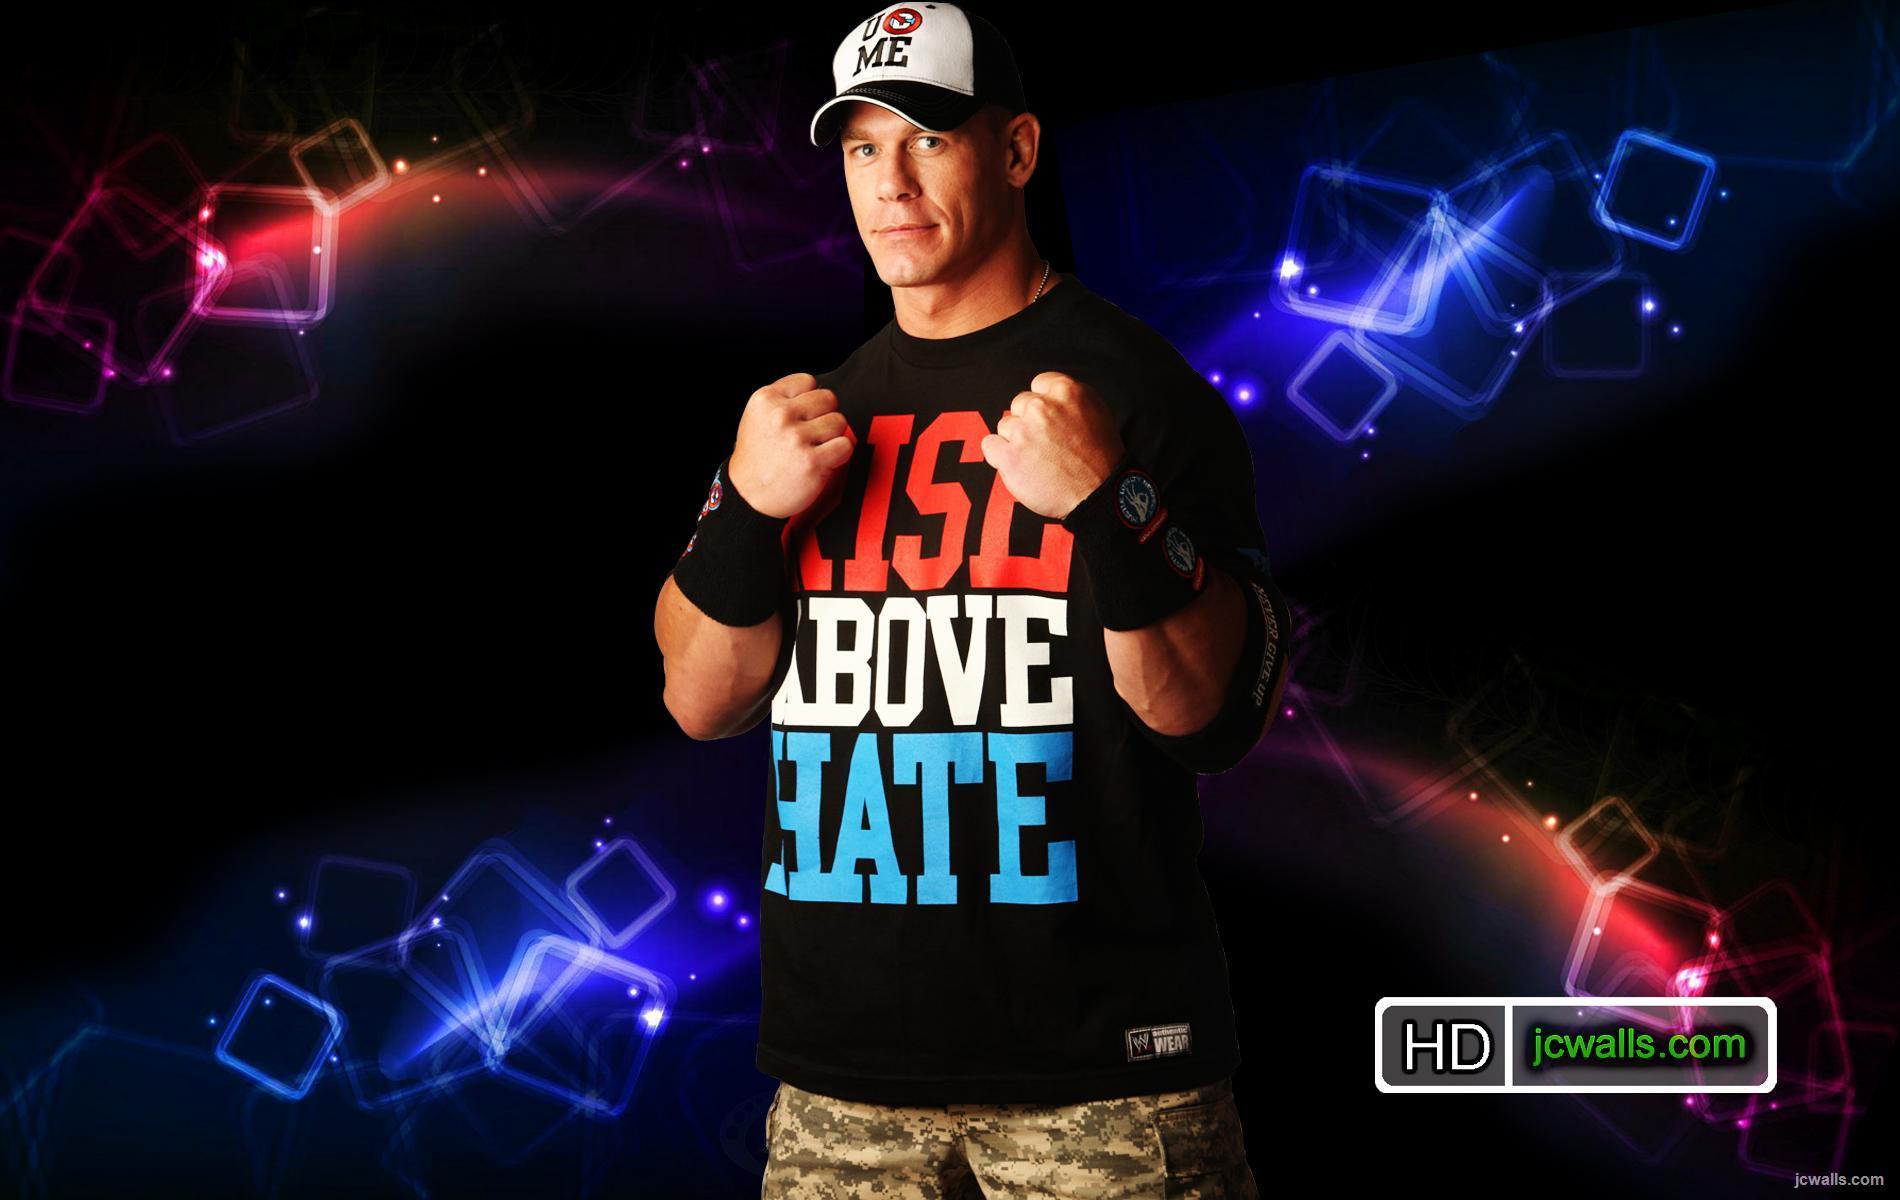 John Cena Image Hd Wallpapers